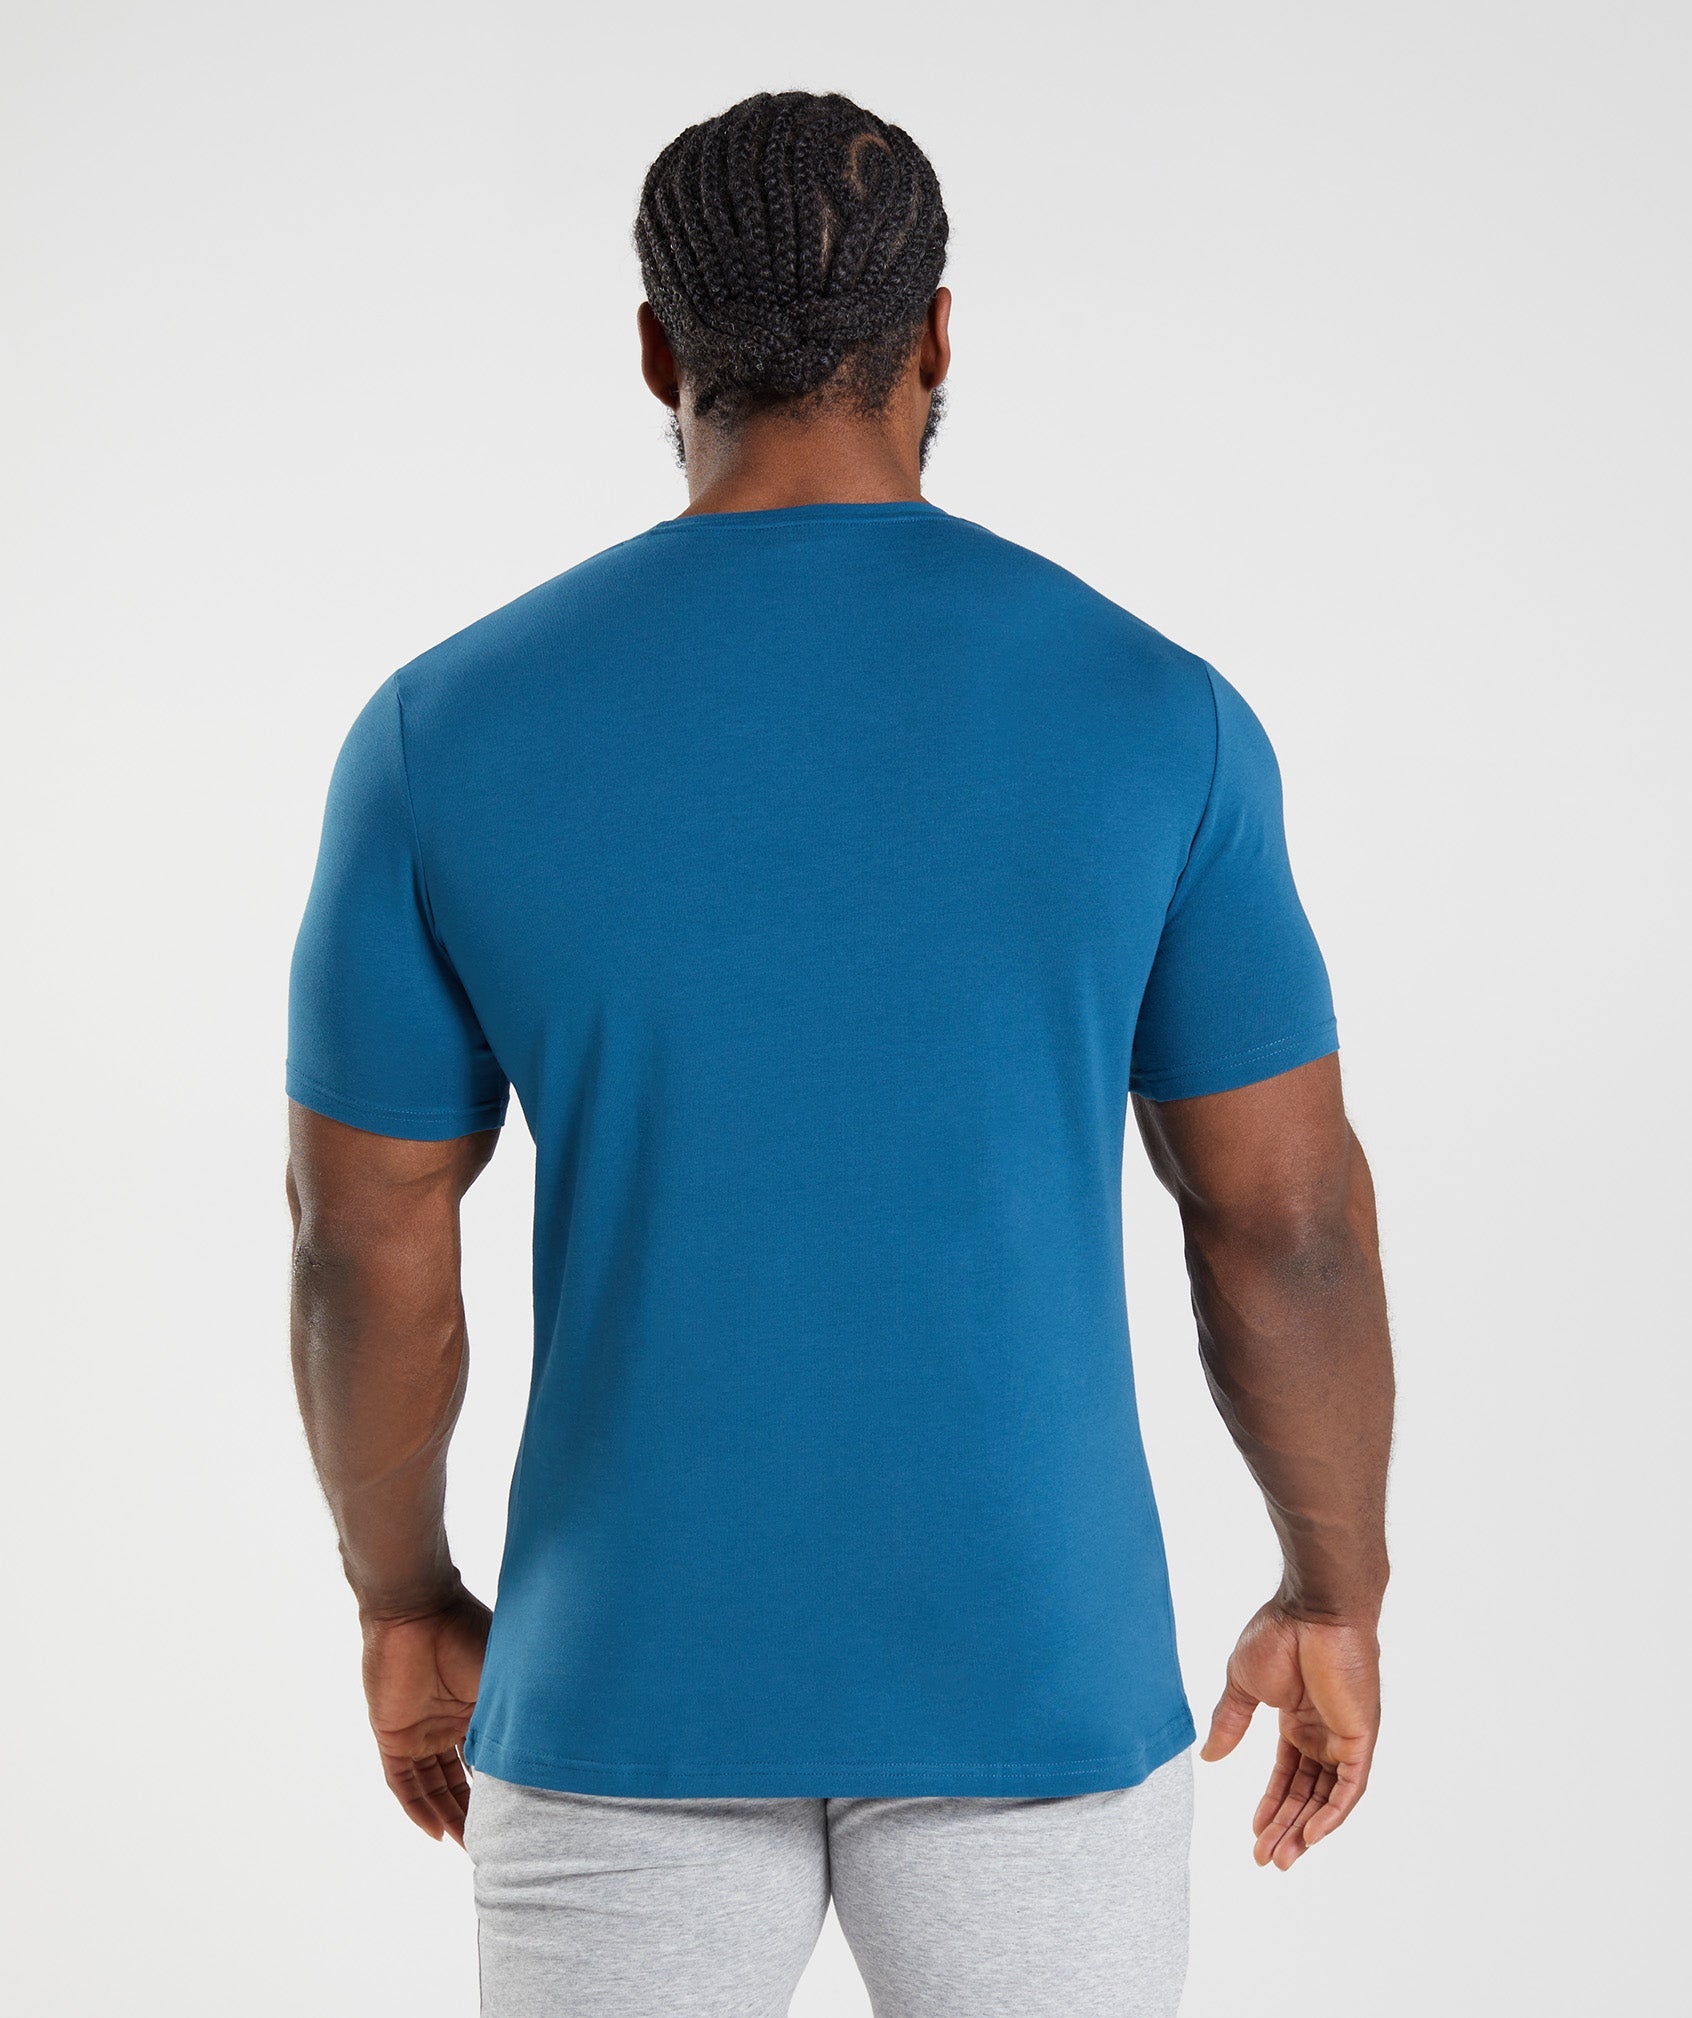 Essential T-Shirt in Atlantic Blue - view 2